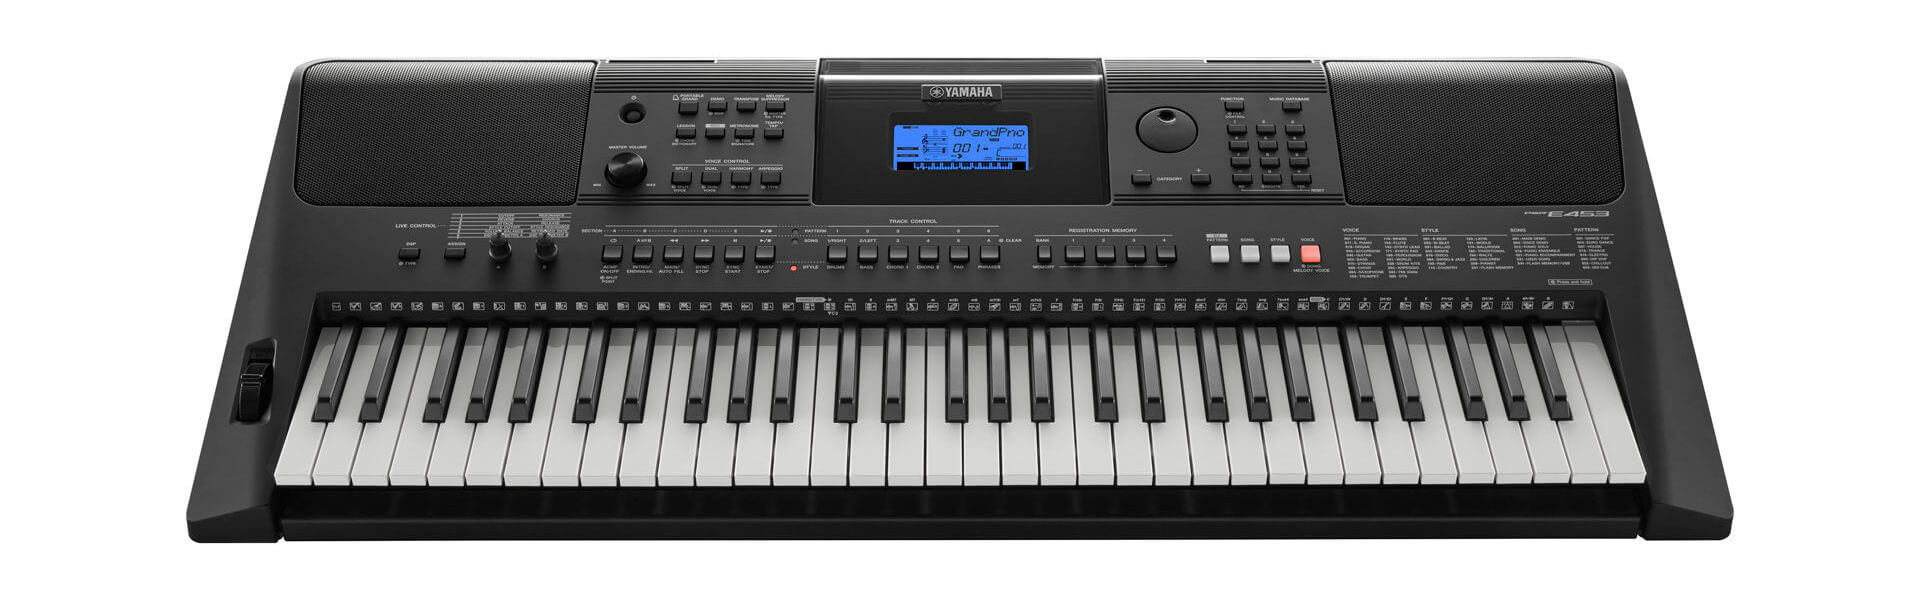 Yamaha piano keyboard dust cover for EW400 